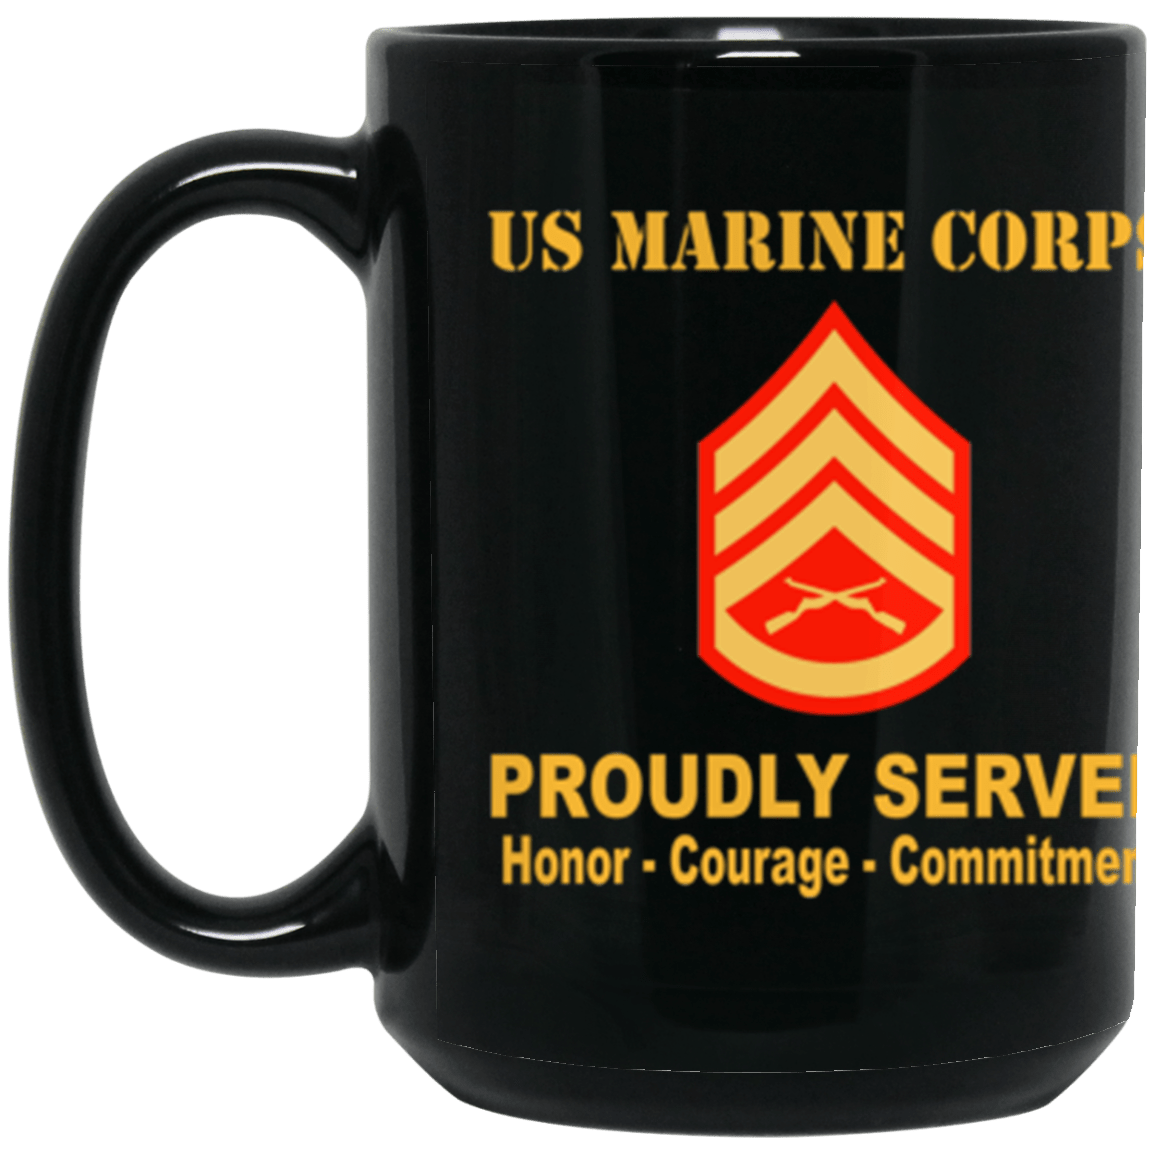 USMC E-6 Staff Sergeant E6 SSgt Staff Noncommissioned Officer Ranks Proudly Served Core Values 15 oz. Black Mug